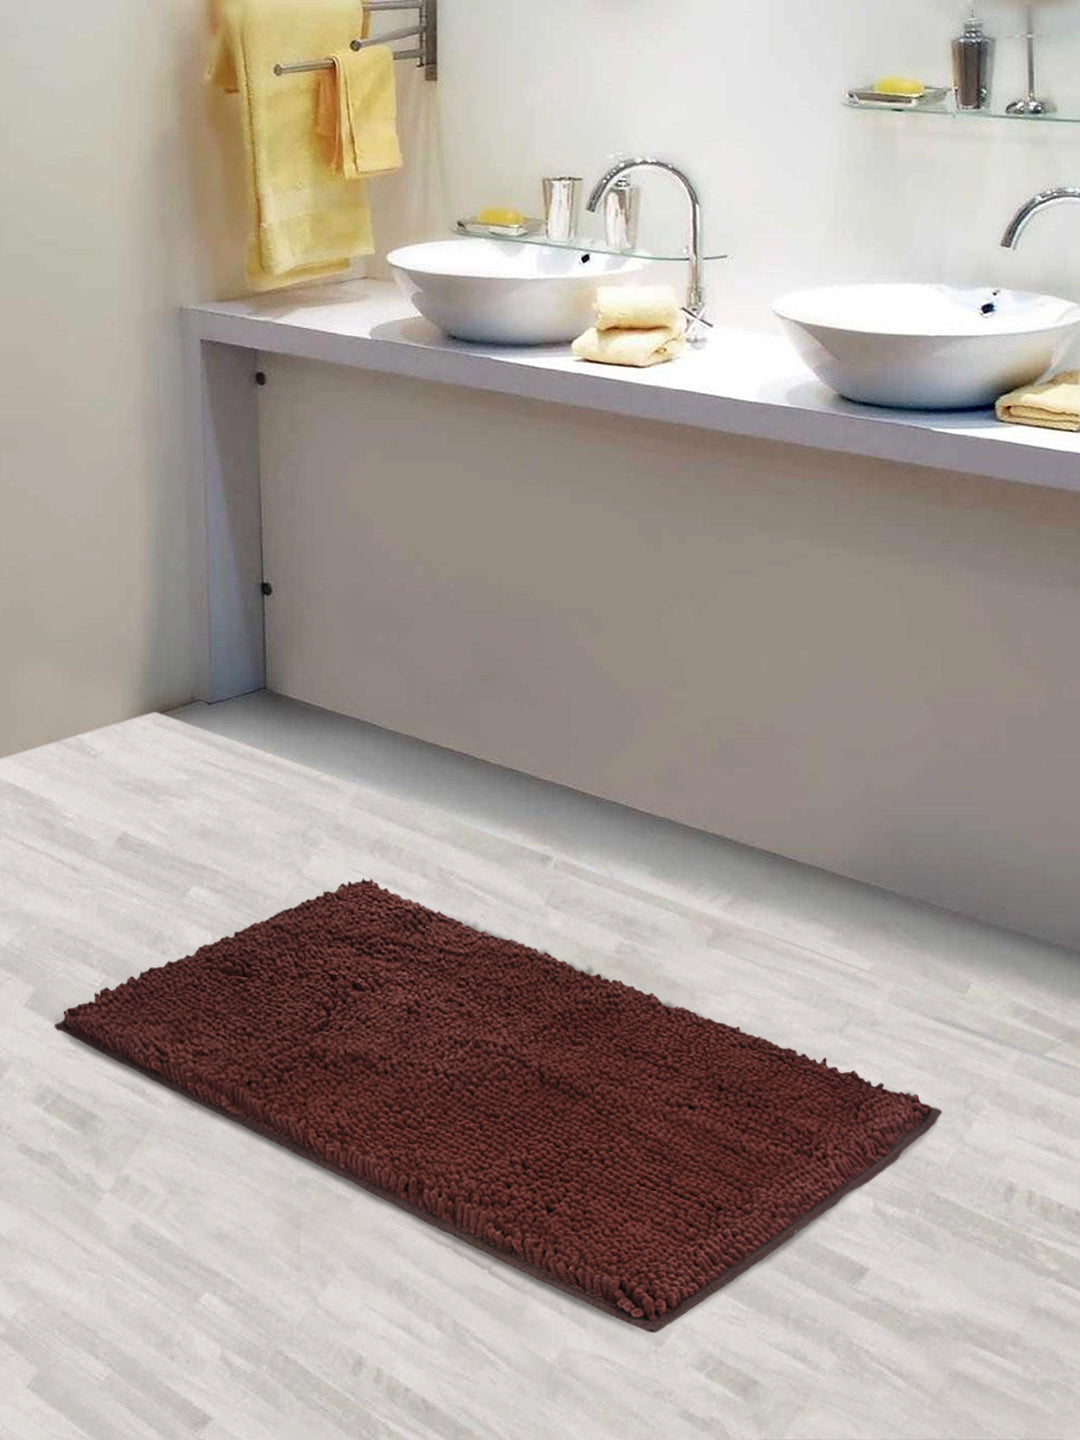 Lushomes Bathroom Mat, 2200 GSM Floor, bath mat Mat with High Pile Microfiber, anti skid mat for bathroom Floor, bath mat Non Slip Anti Slip, Premium Quality (16 x 24 Inch, Single Pc, Dark Brown)